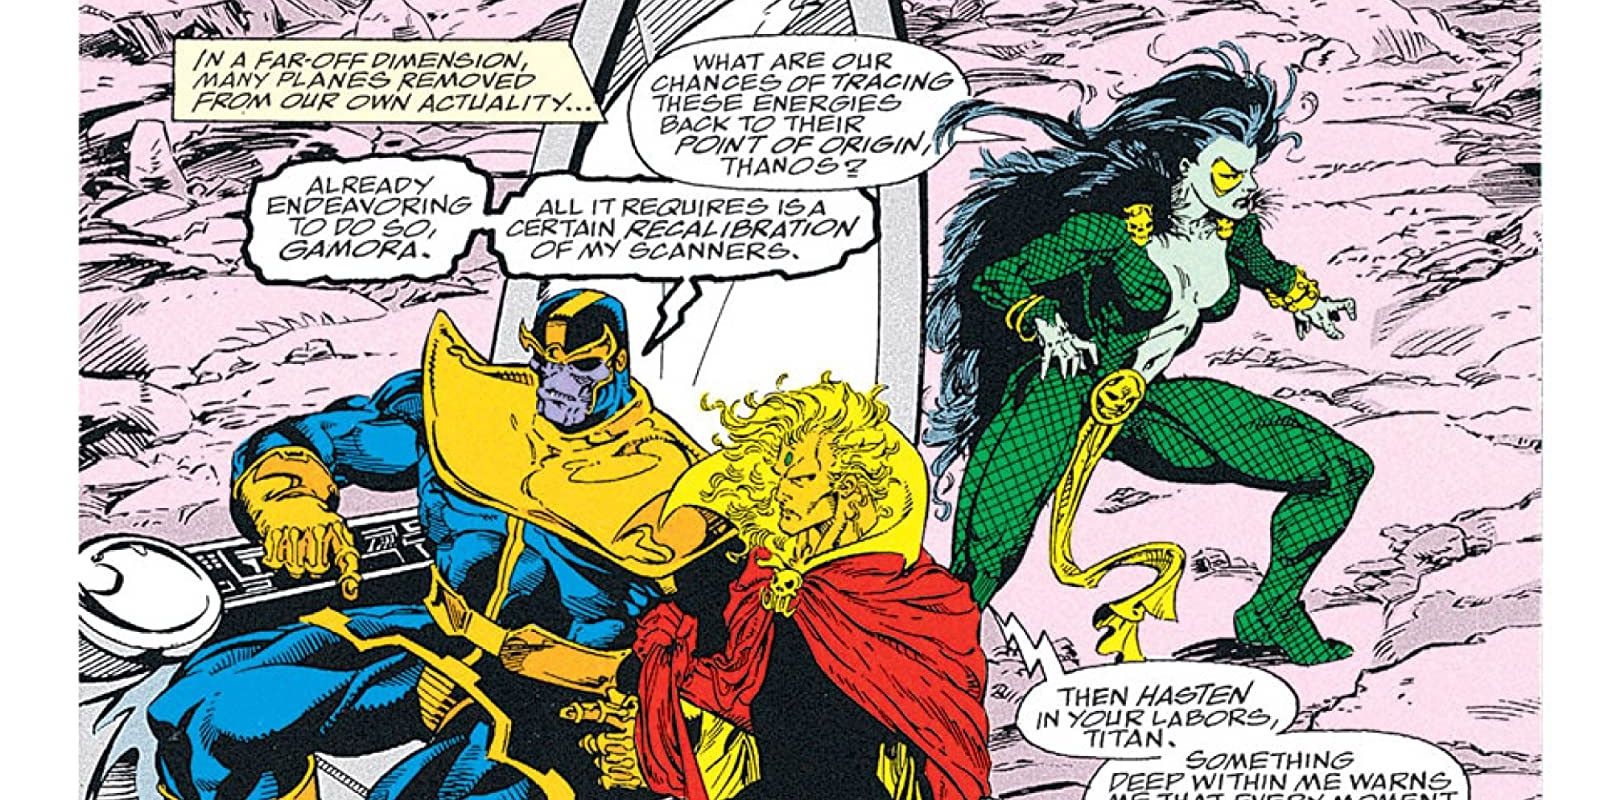 Thanos, Adam Warlock, and Gamora from Marvel Comics